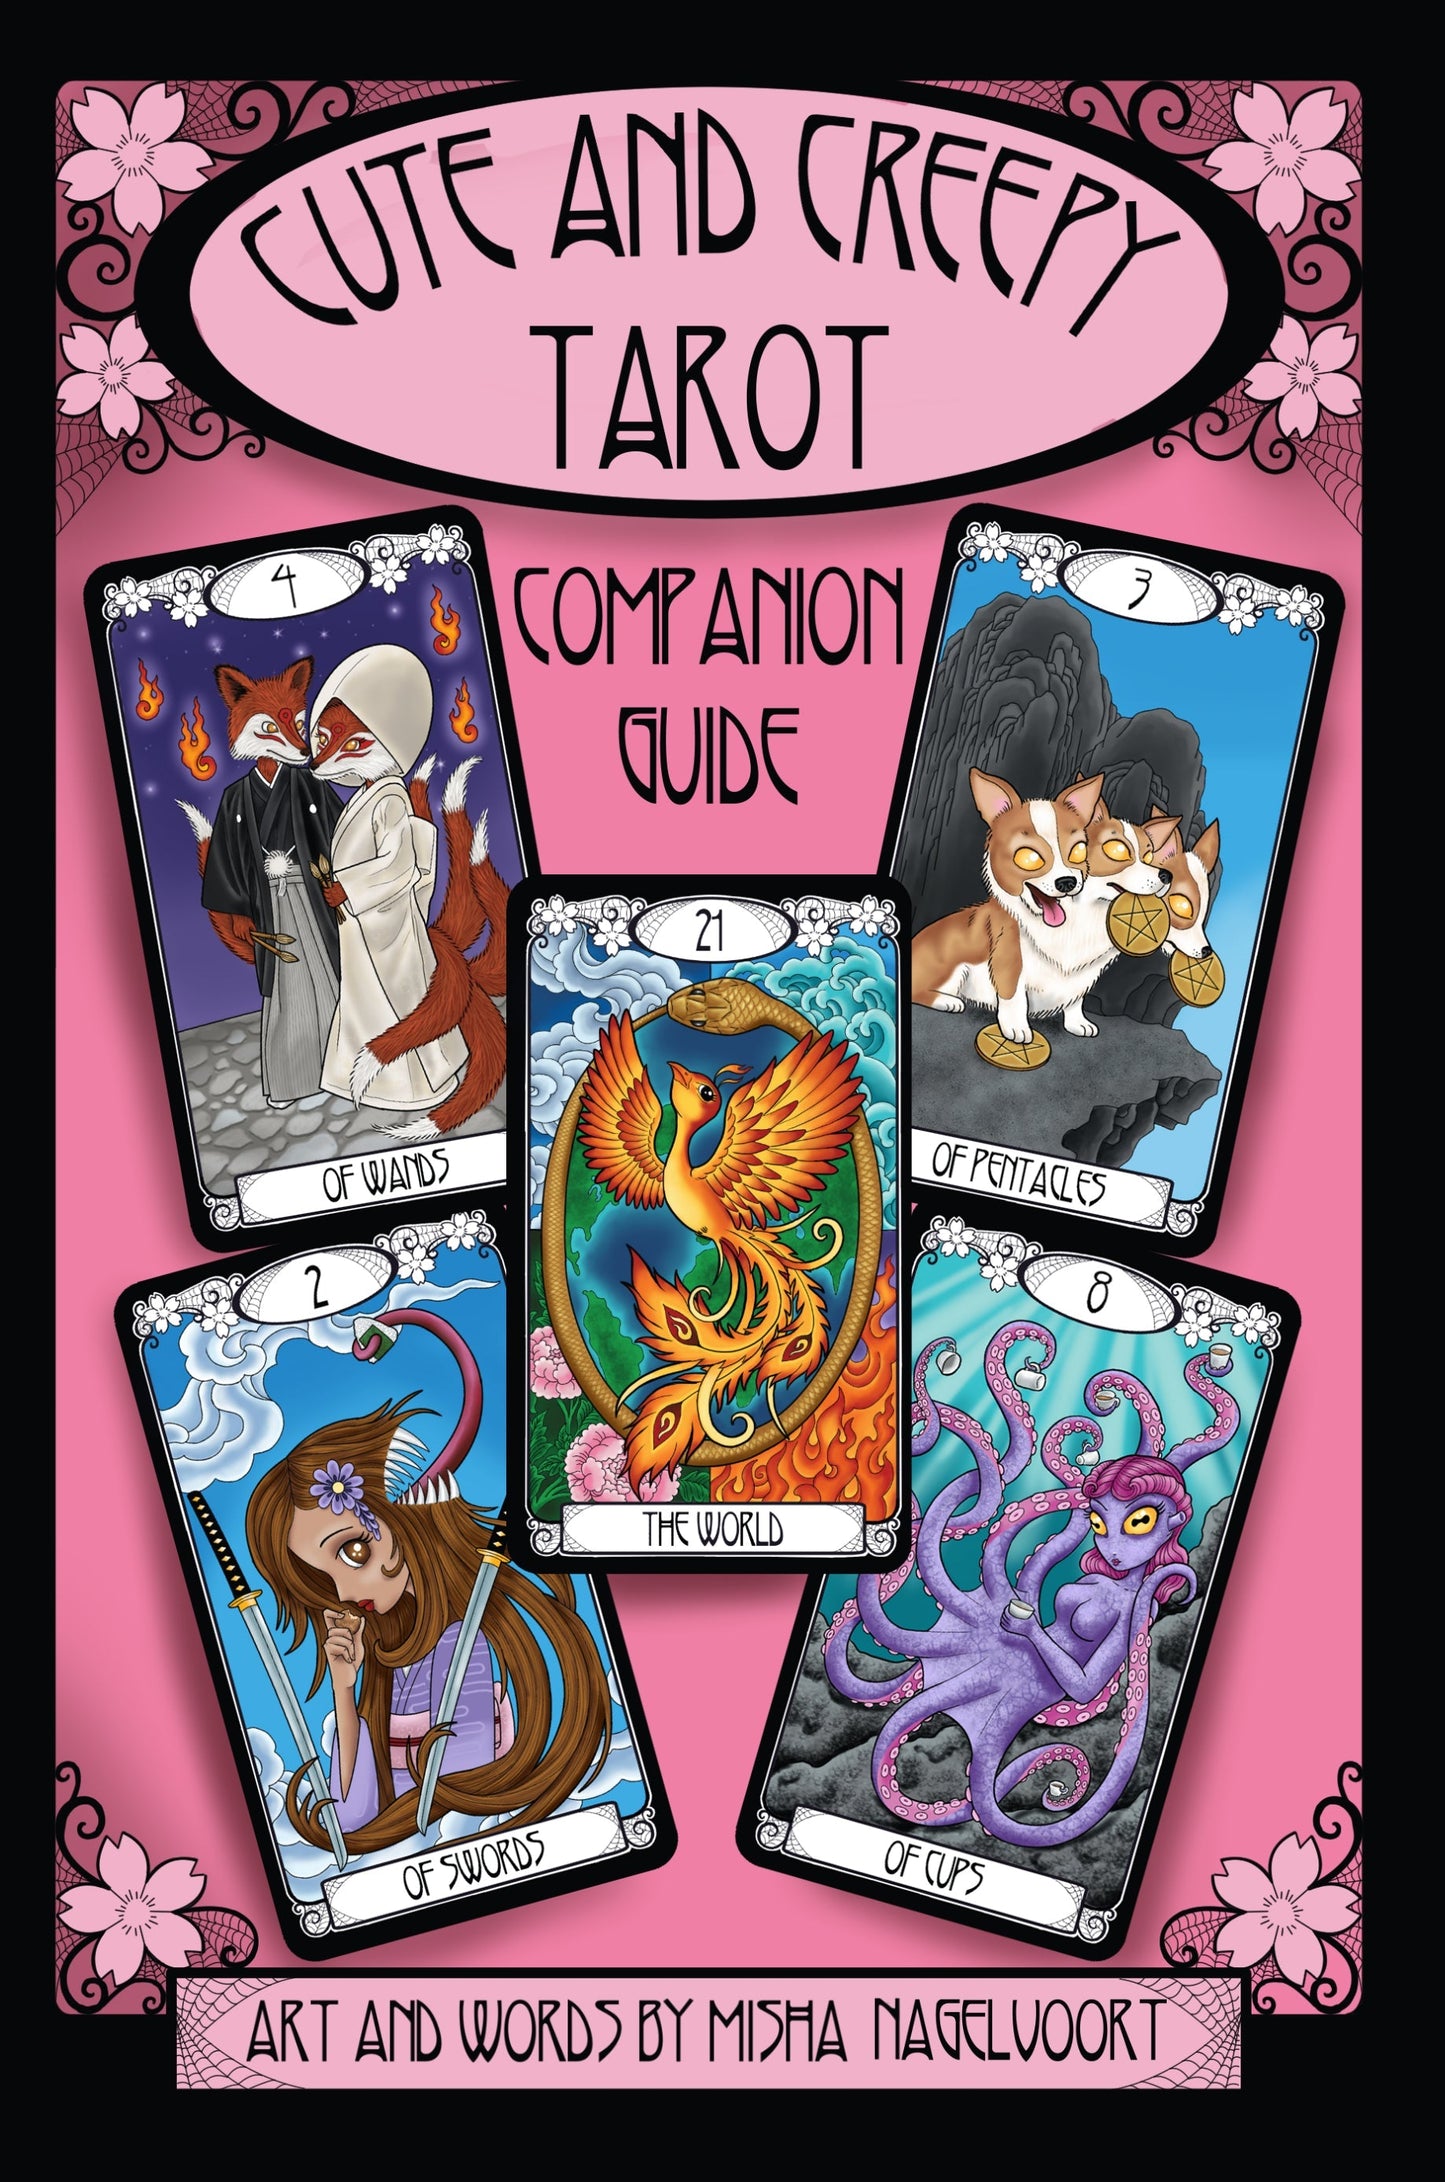 SIGNED Cute & Creepy Tarot Deck & COMPANION Guide